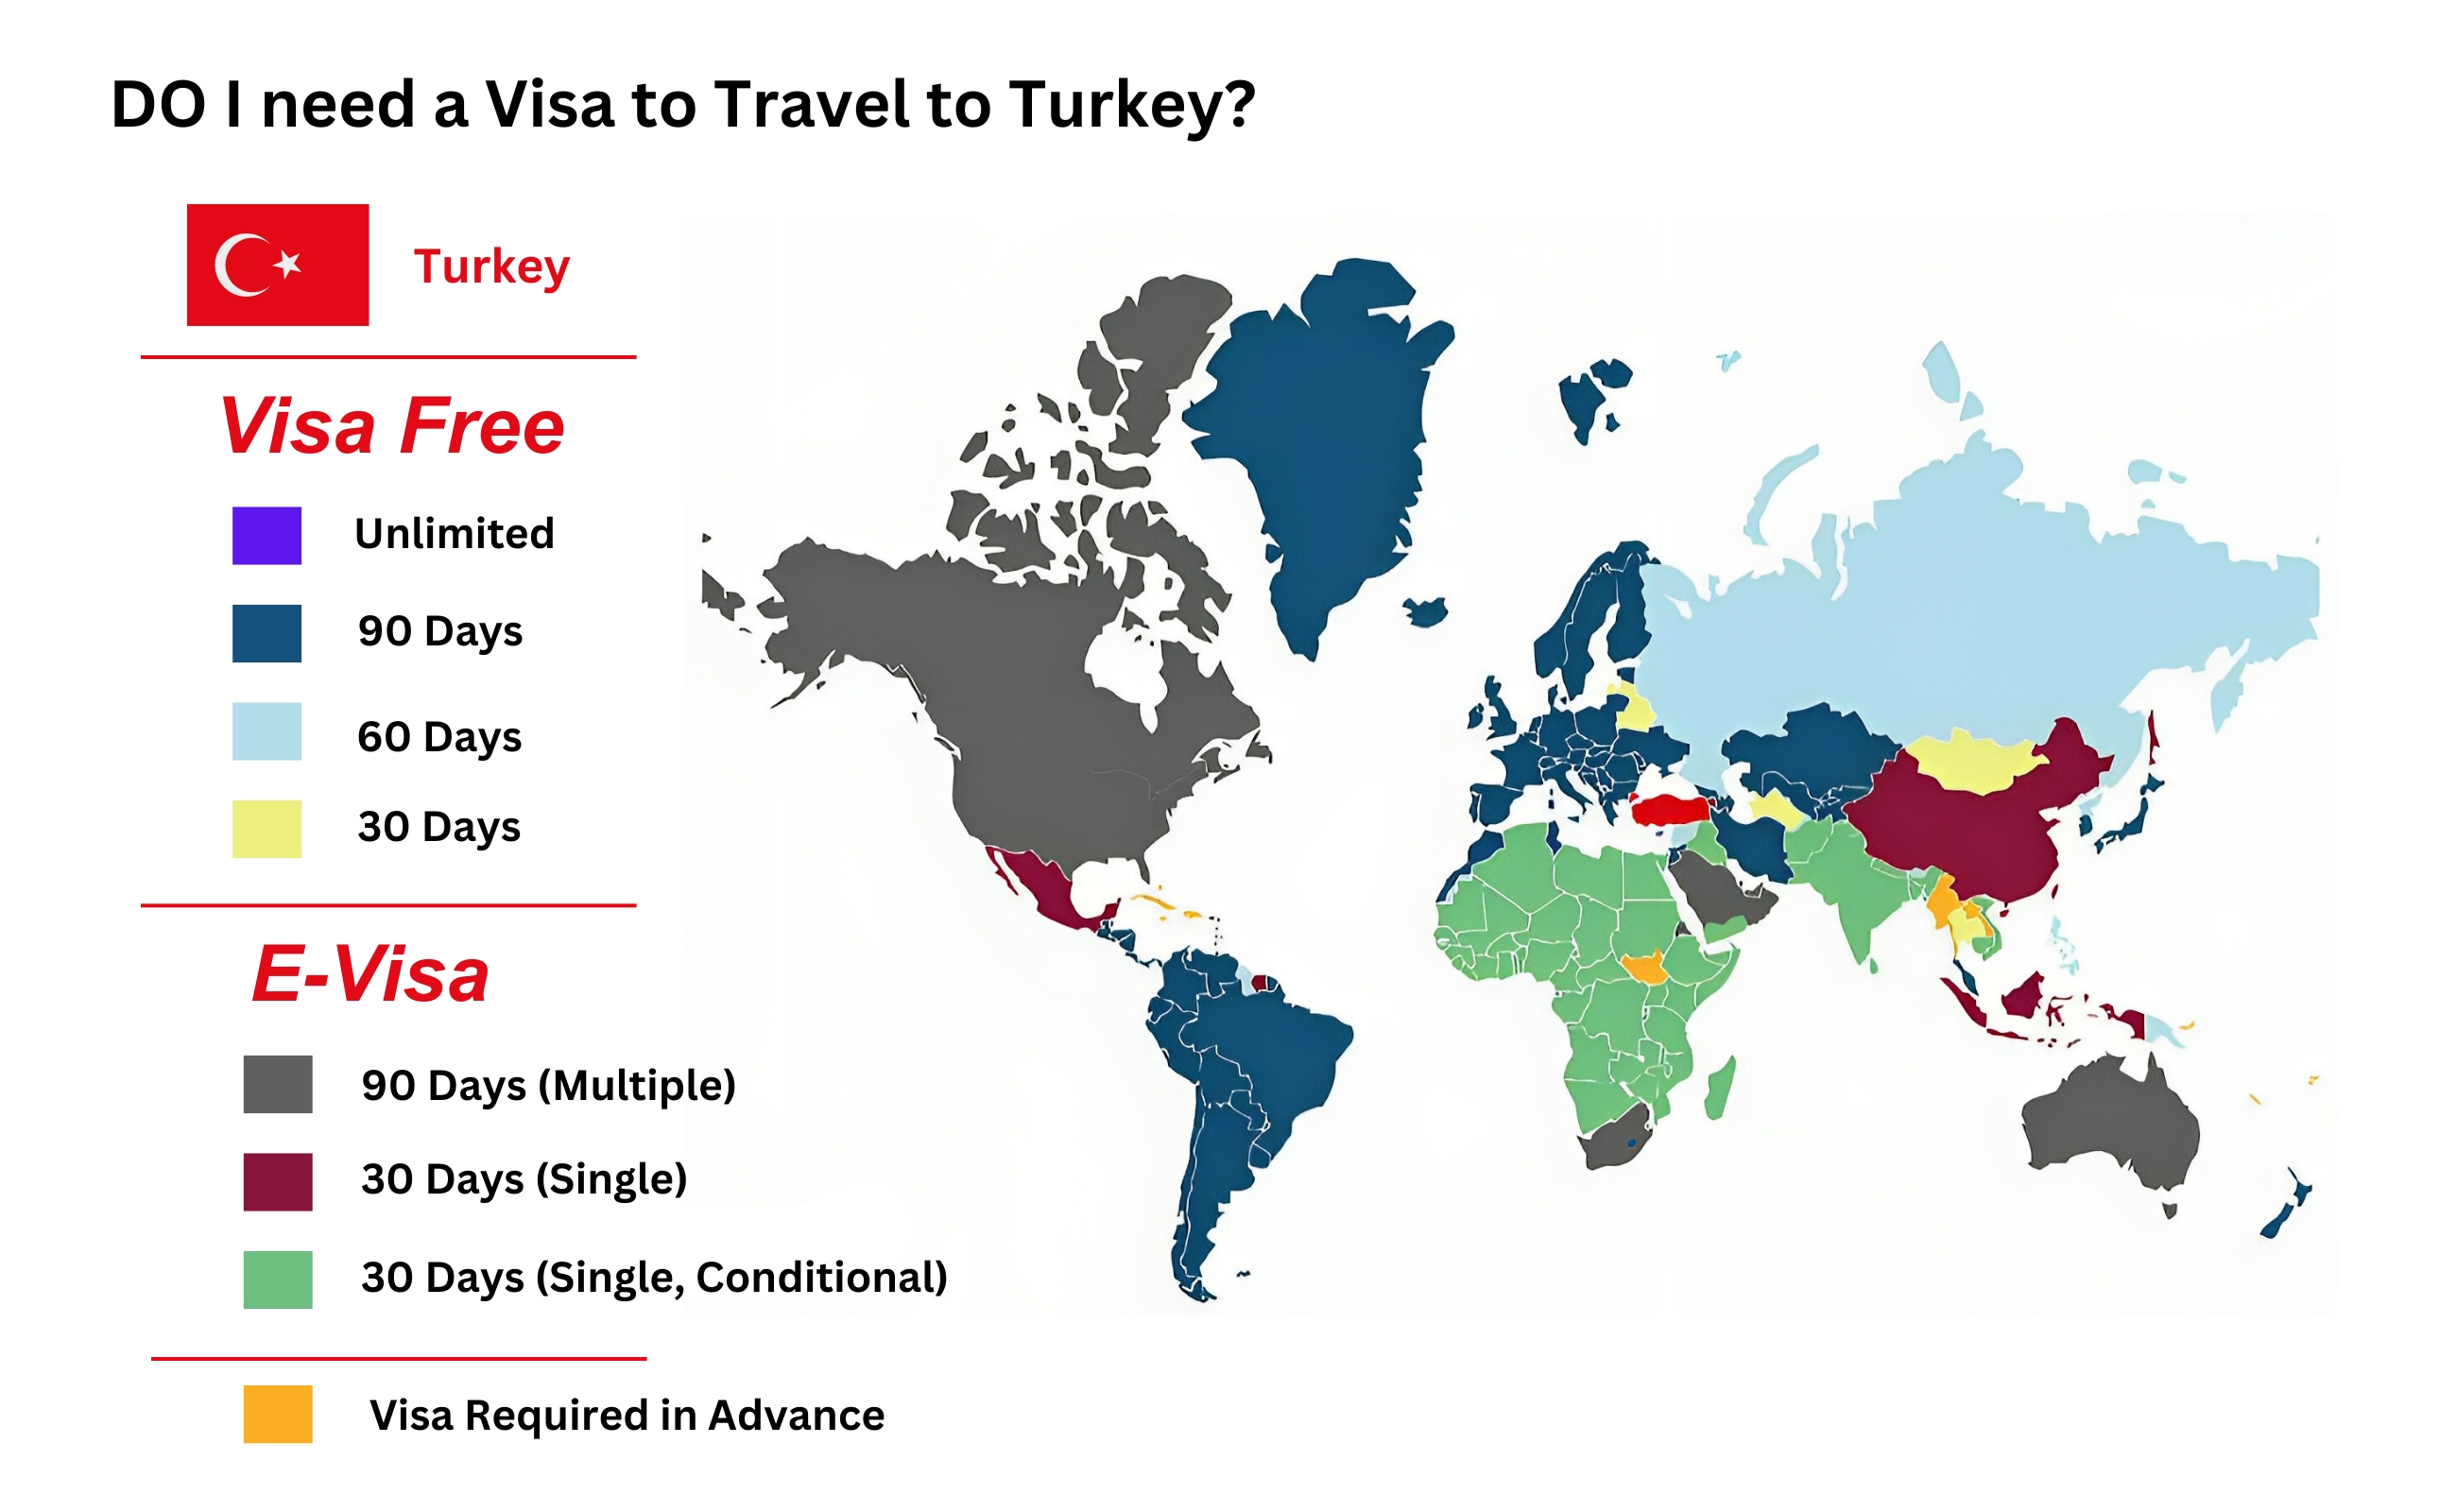 Nationalities Granted Visa-Free Entry to Turkey